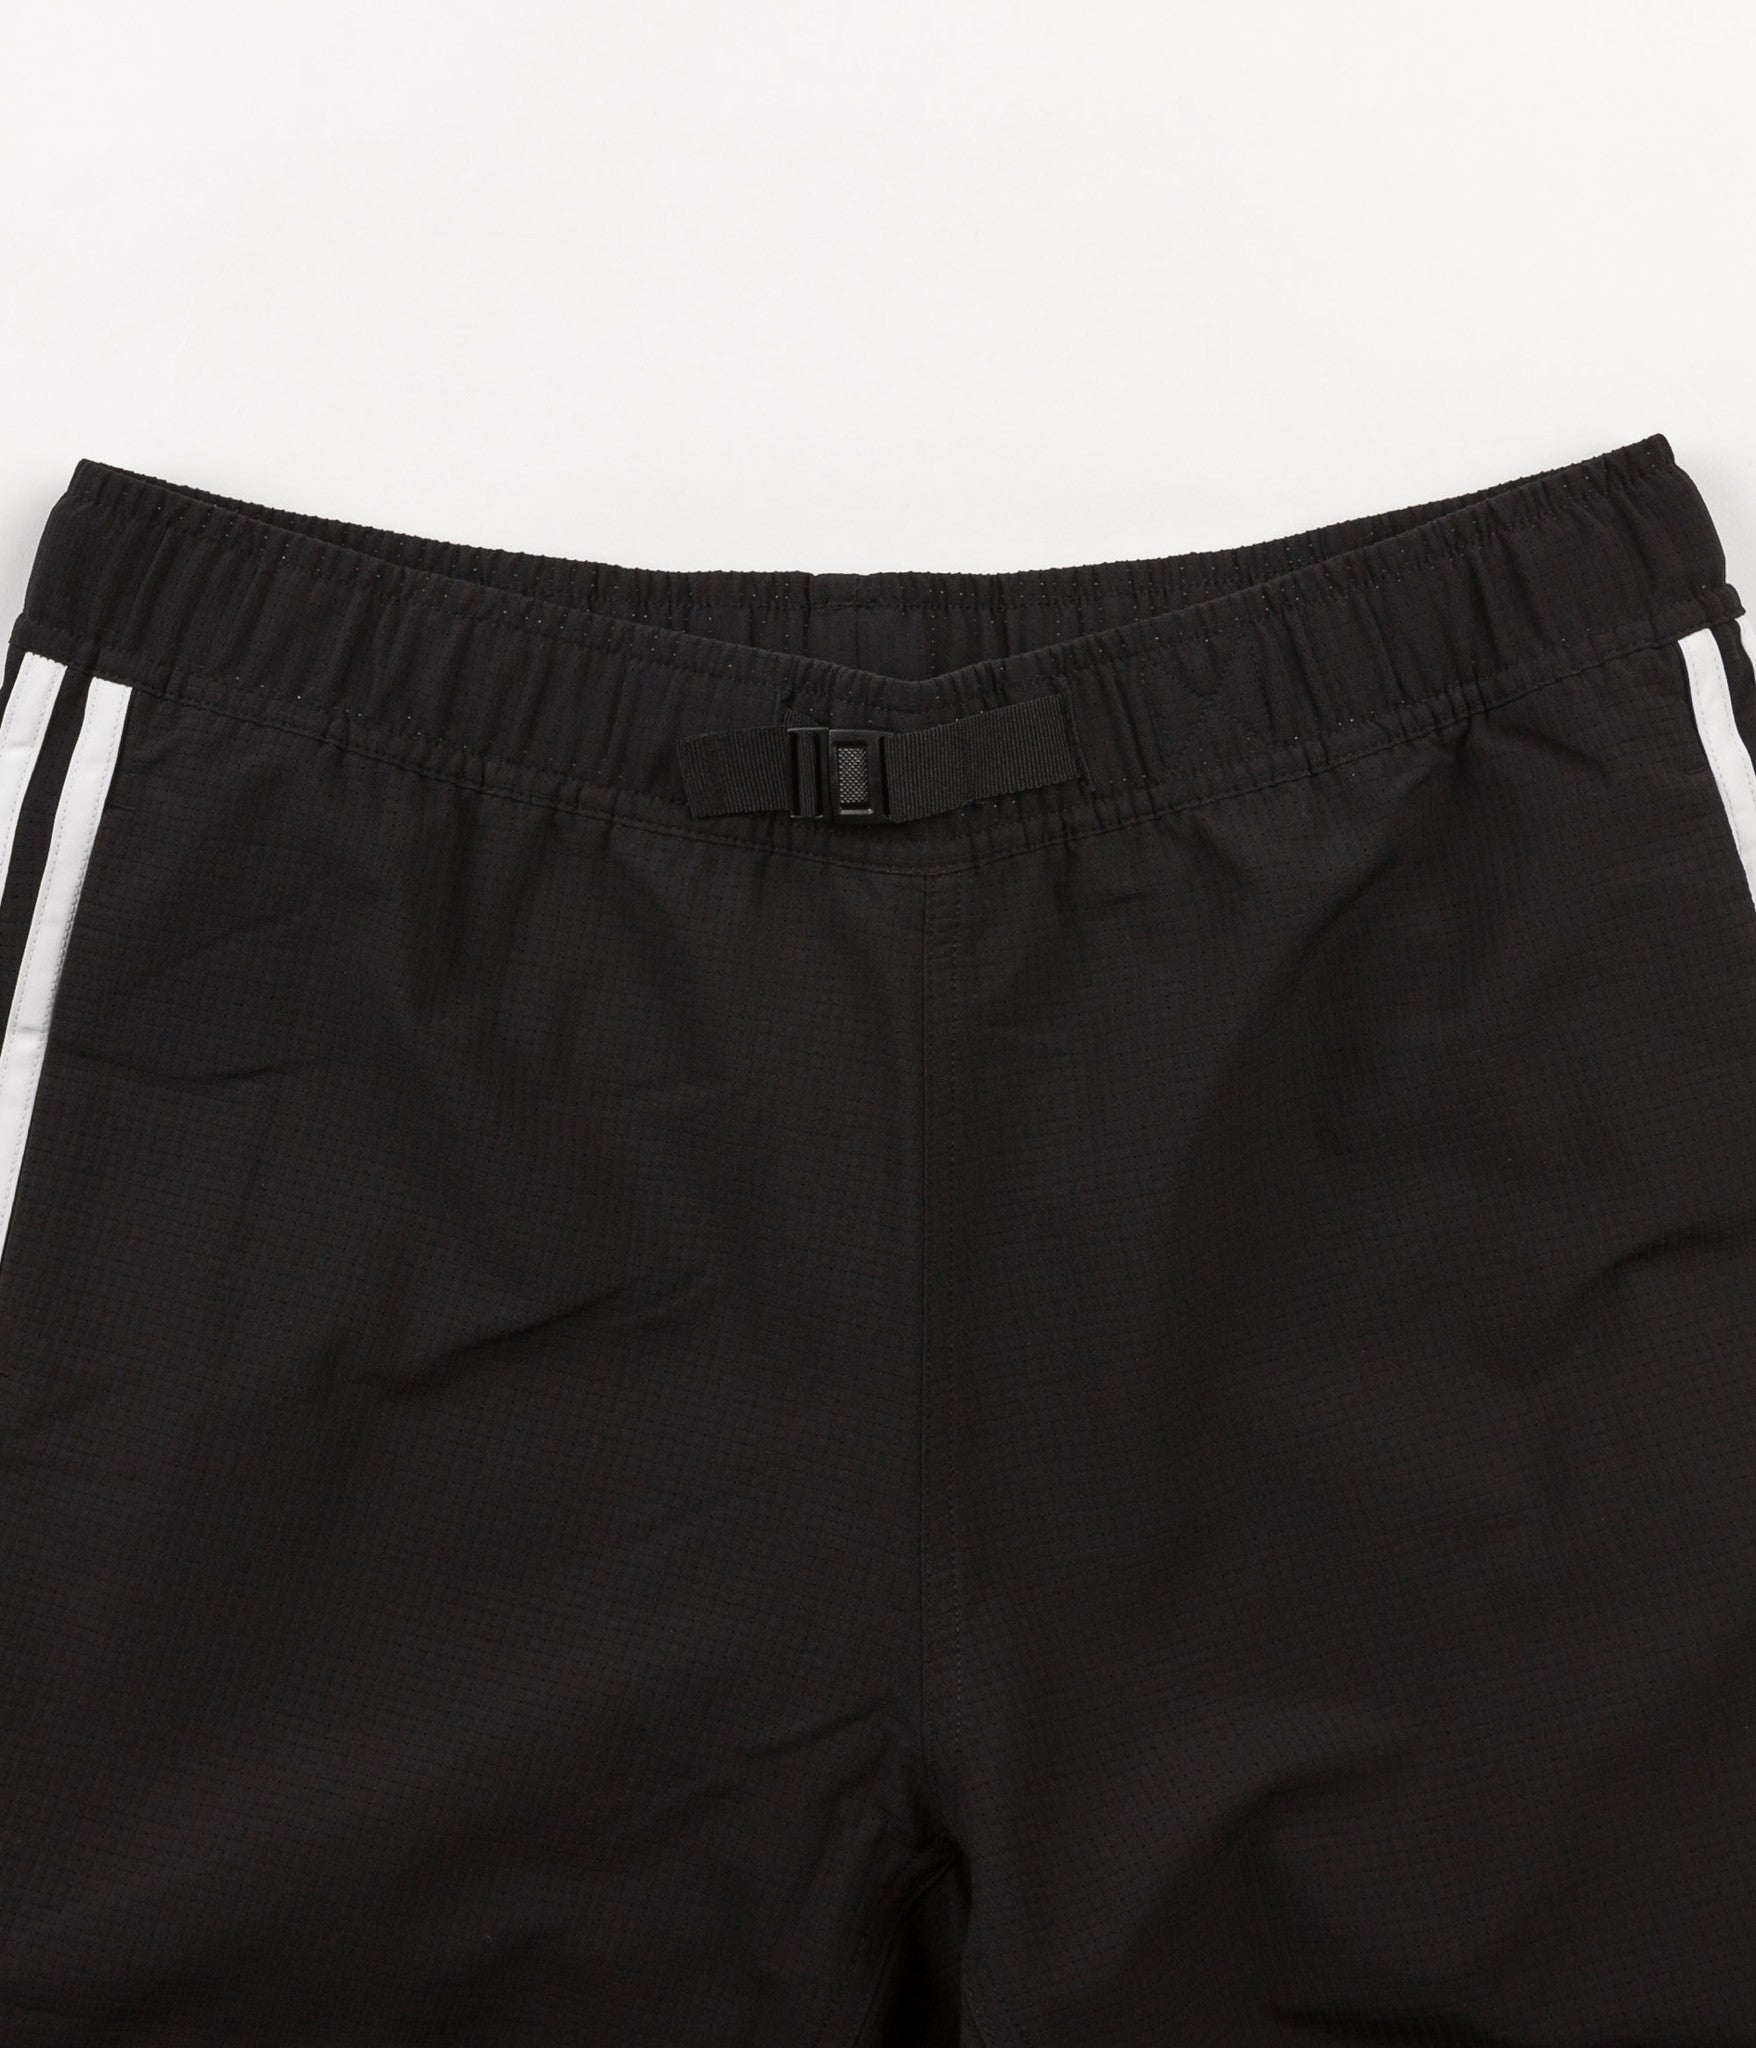 Adidas Aerotech Shorts - Black / White | Flatspot